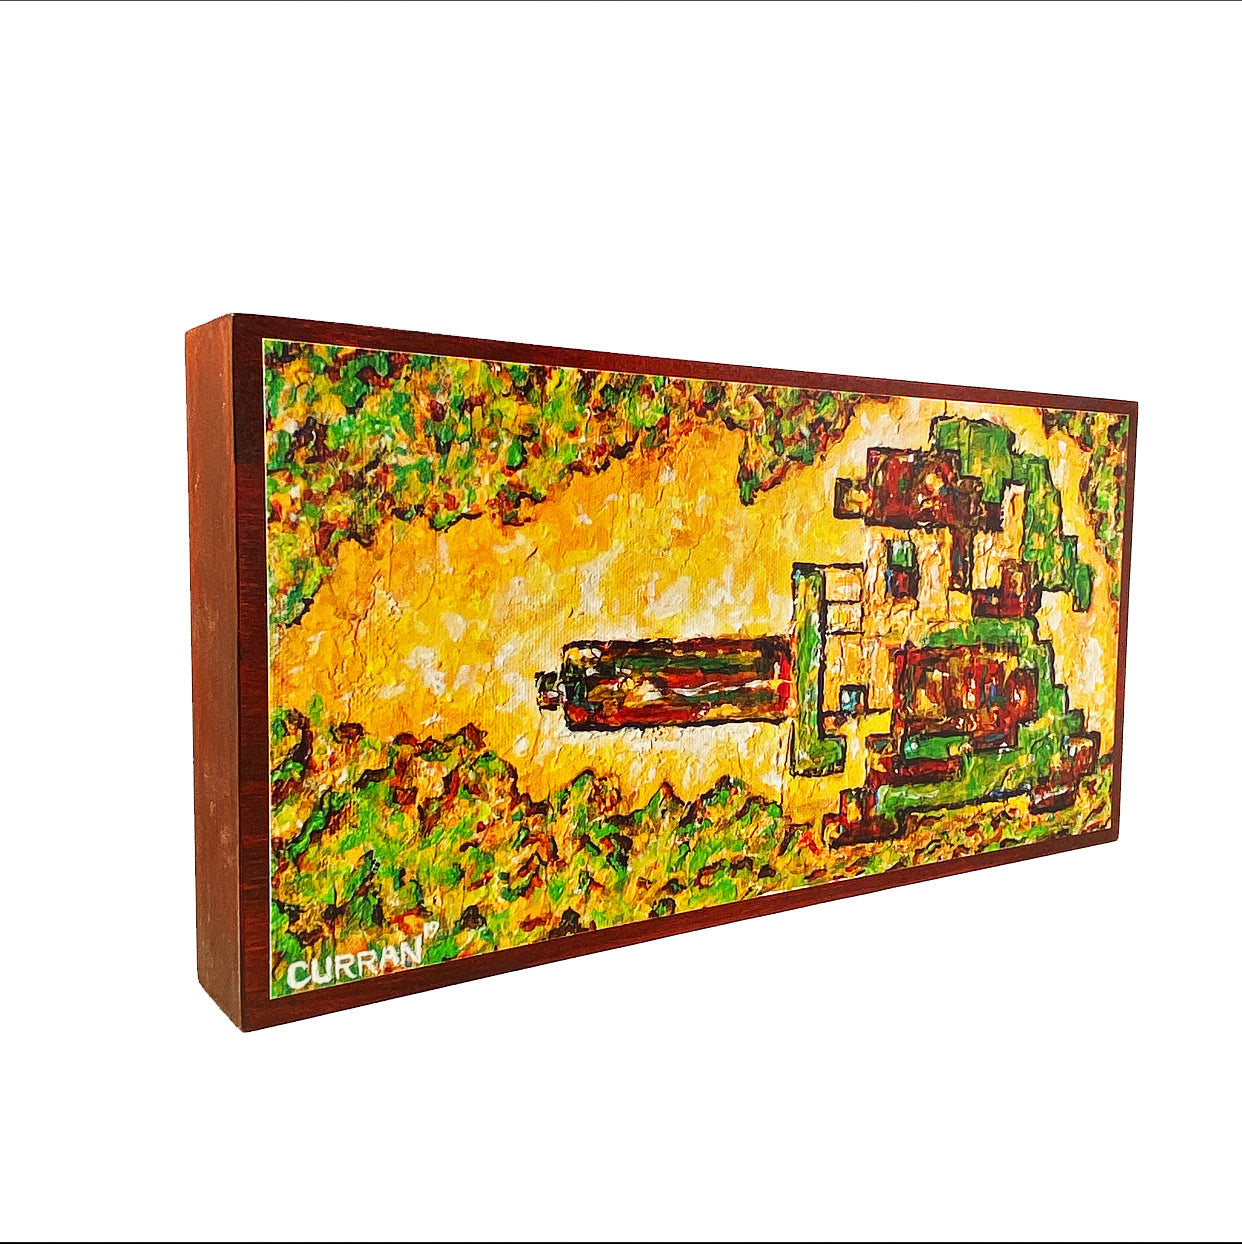 Link on Wood Panel (Limited Edition) - Daniel Curran Art